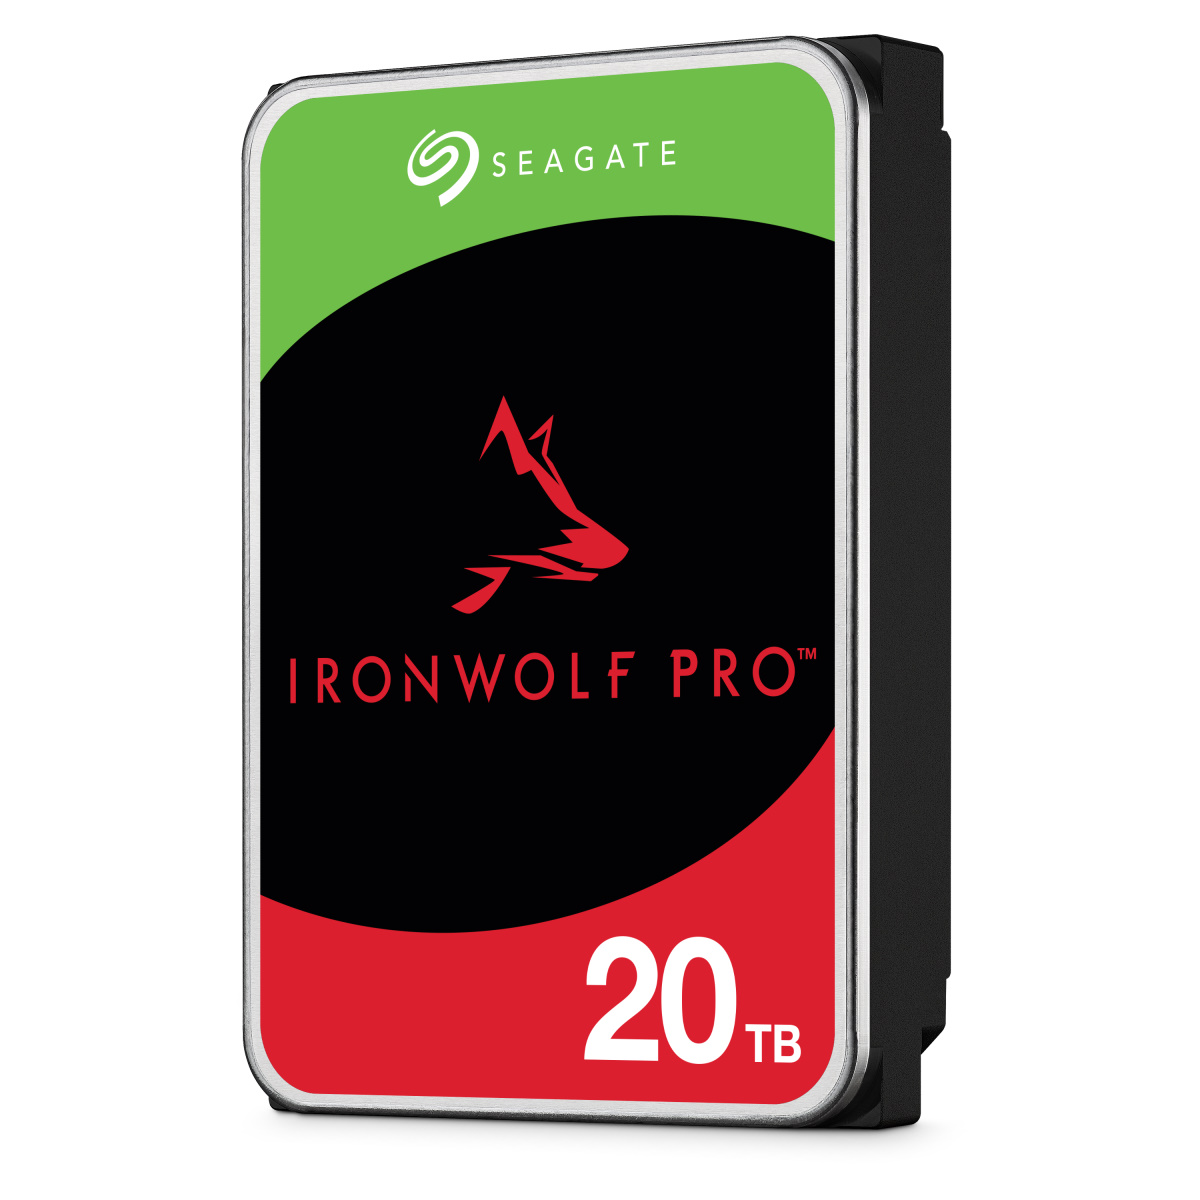 IronWolf Pro 20TB。